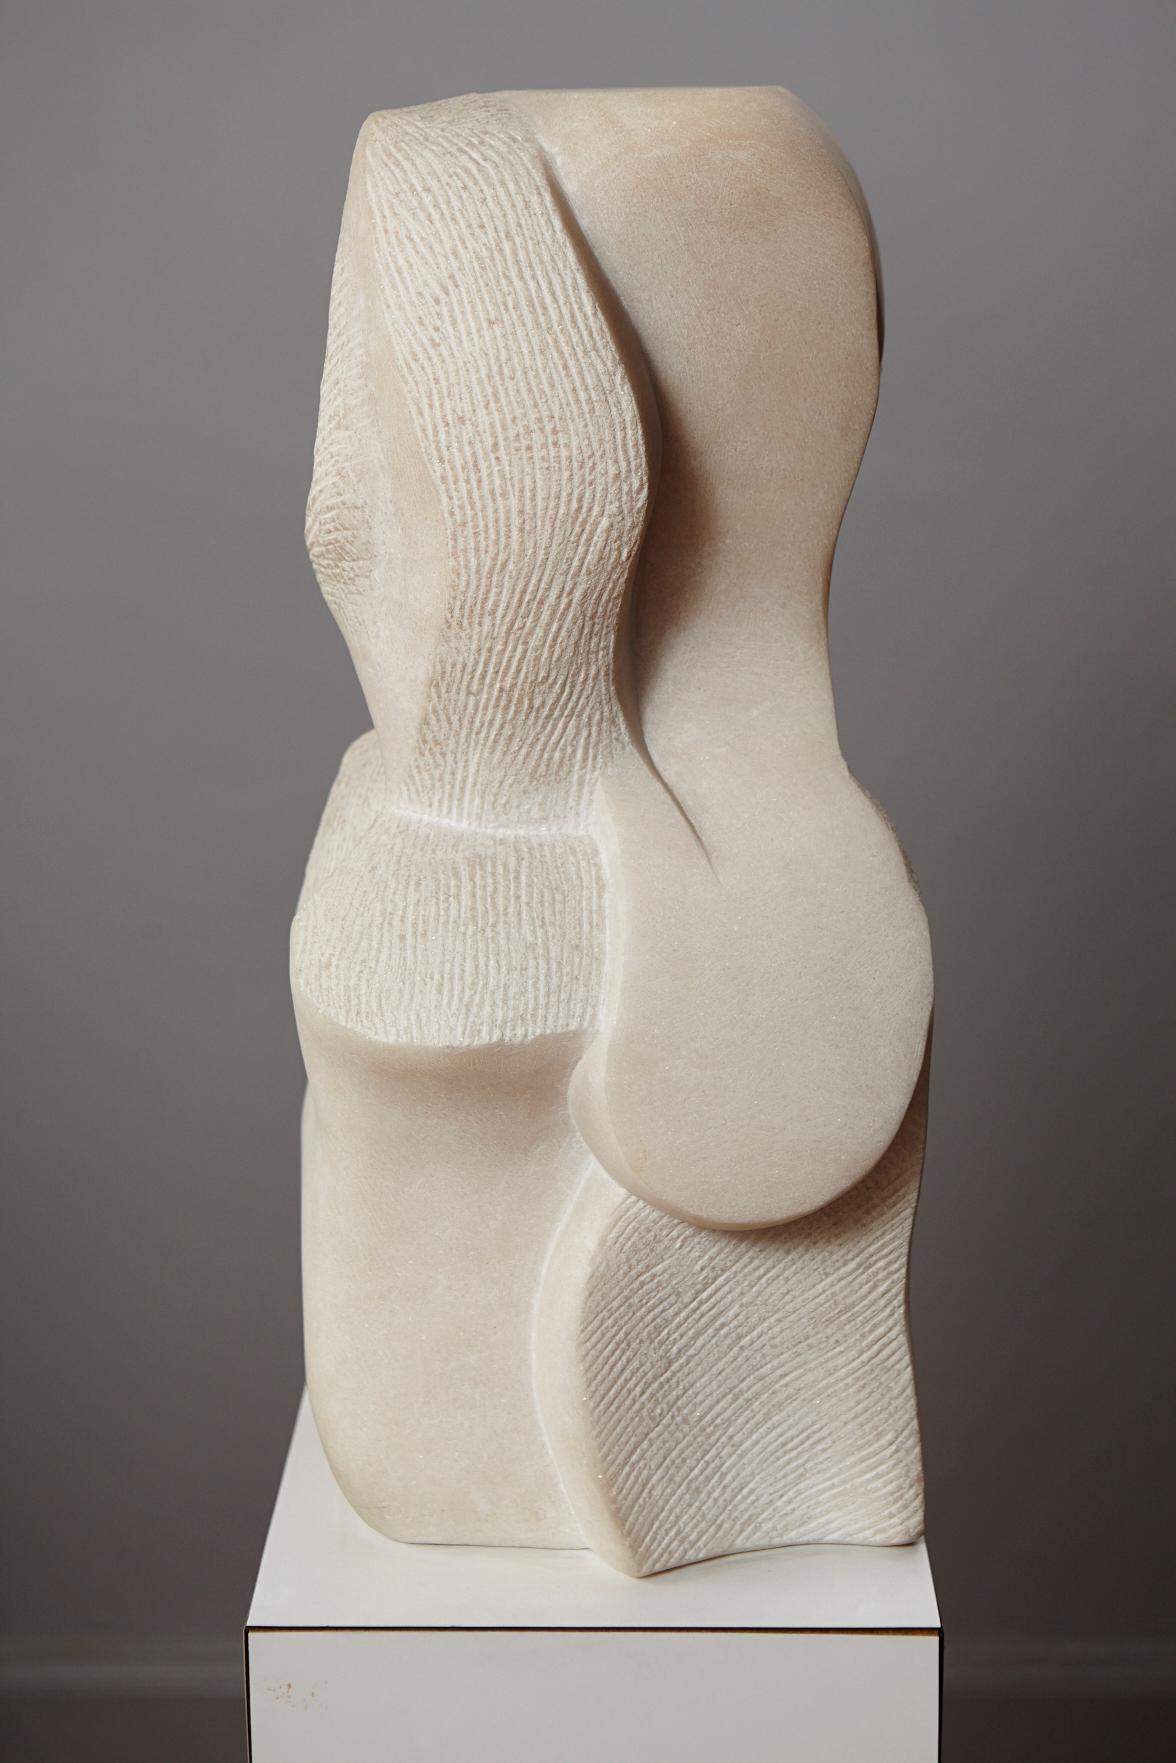 Artemis - Beige Abstract Sculpture by Dolores Singer